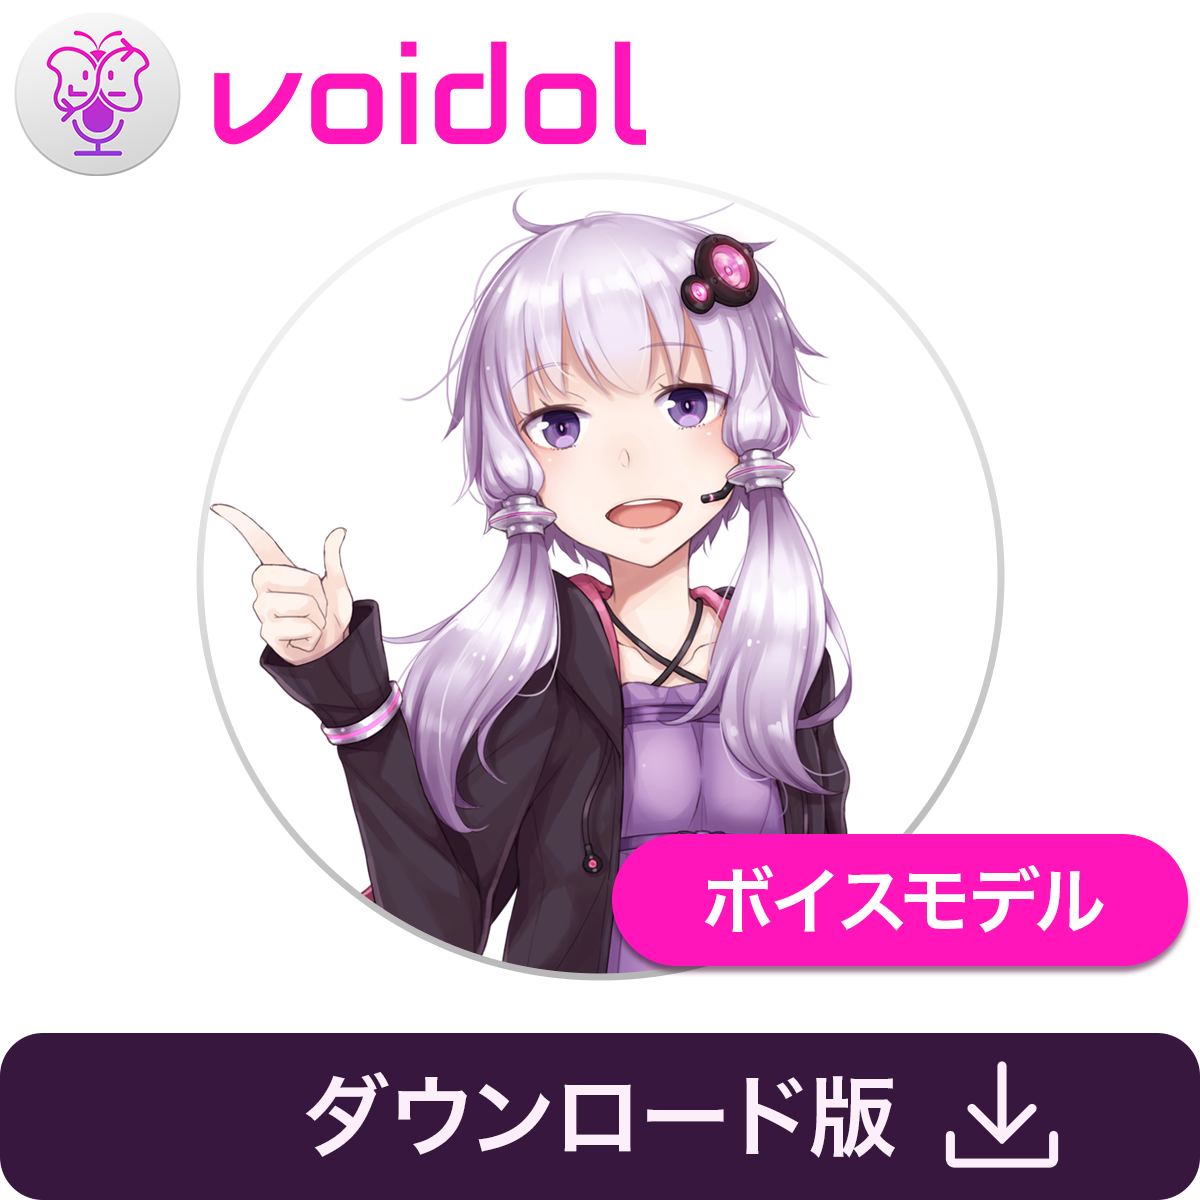 Voidol 結月ゆかり 発売開始 Vocalomakets